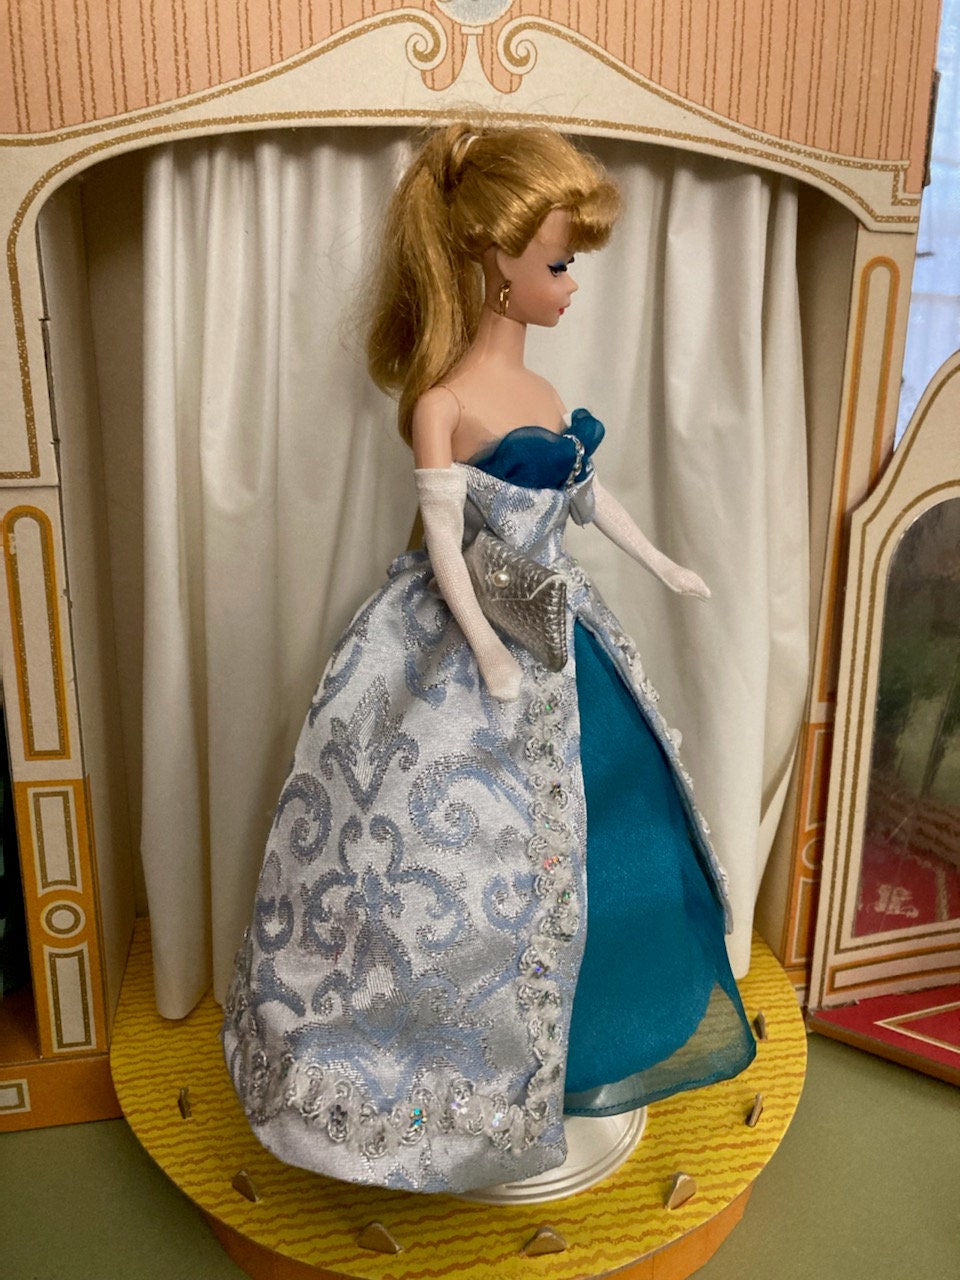 Baby Blue Barbie Doll Dress ffor girl